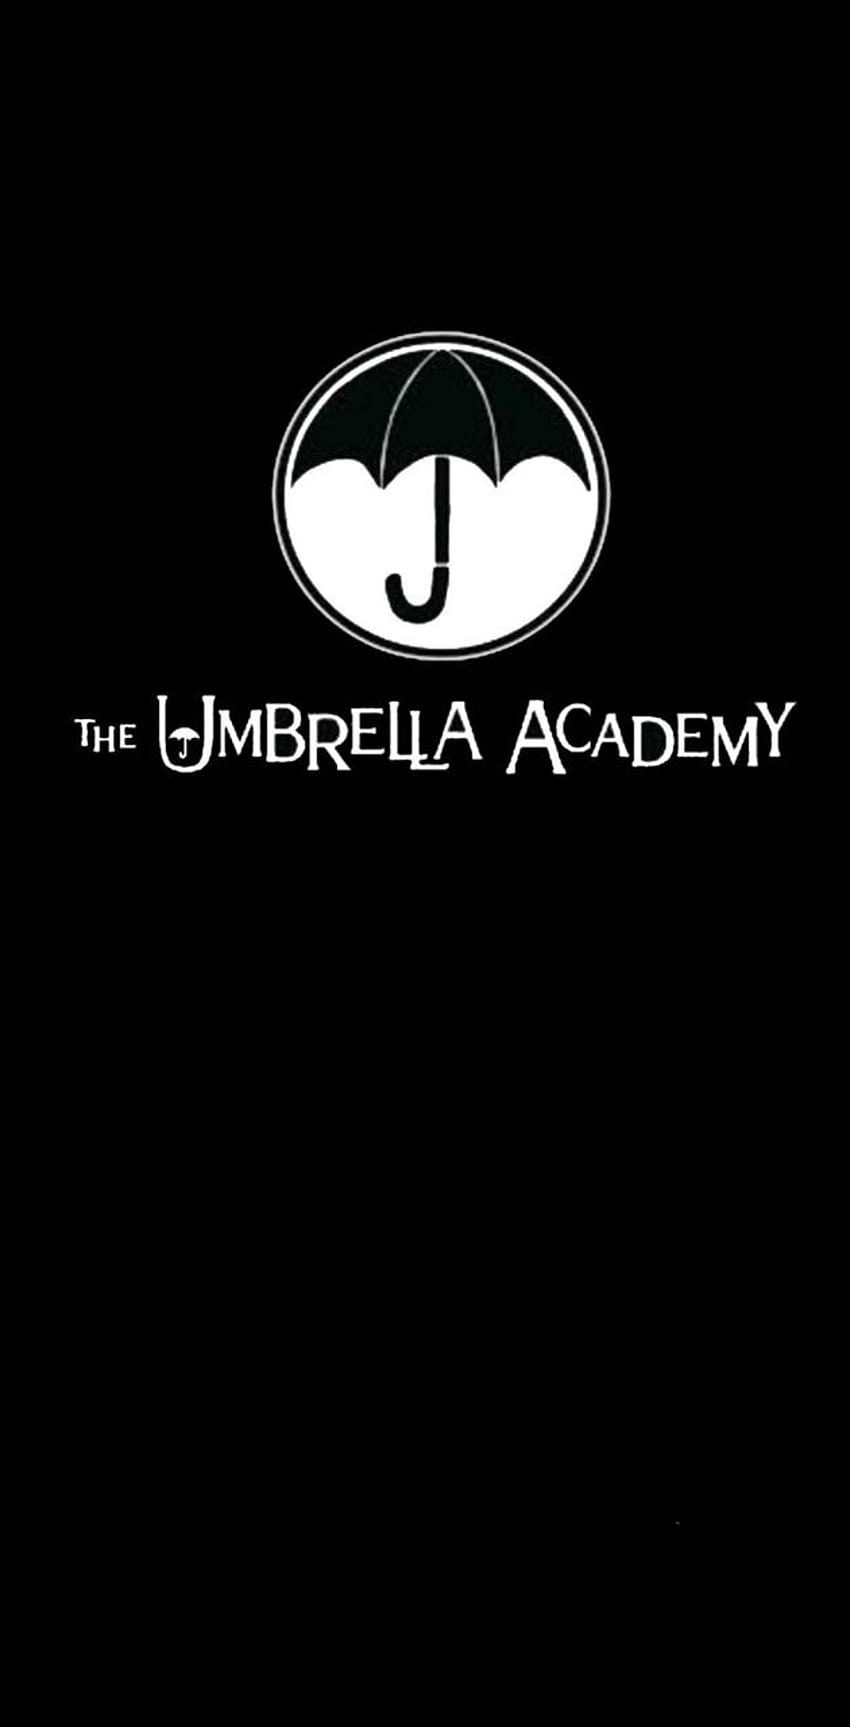 The umbrella academy by ezgiburda - on ZEDGEâ, The Umbrella Academy Logo HD phone wallpaper